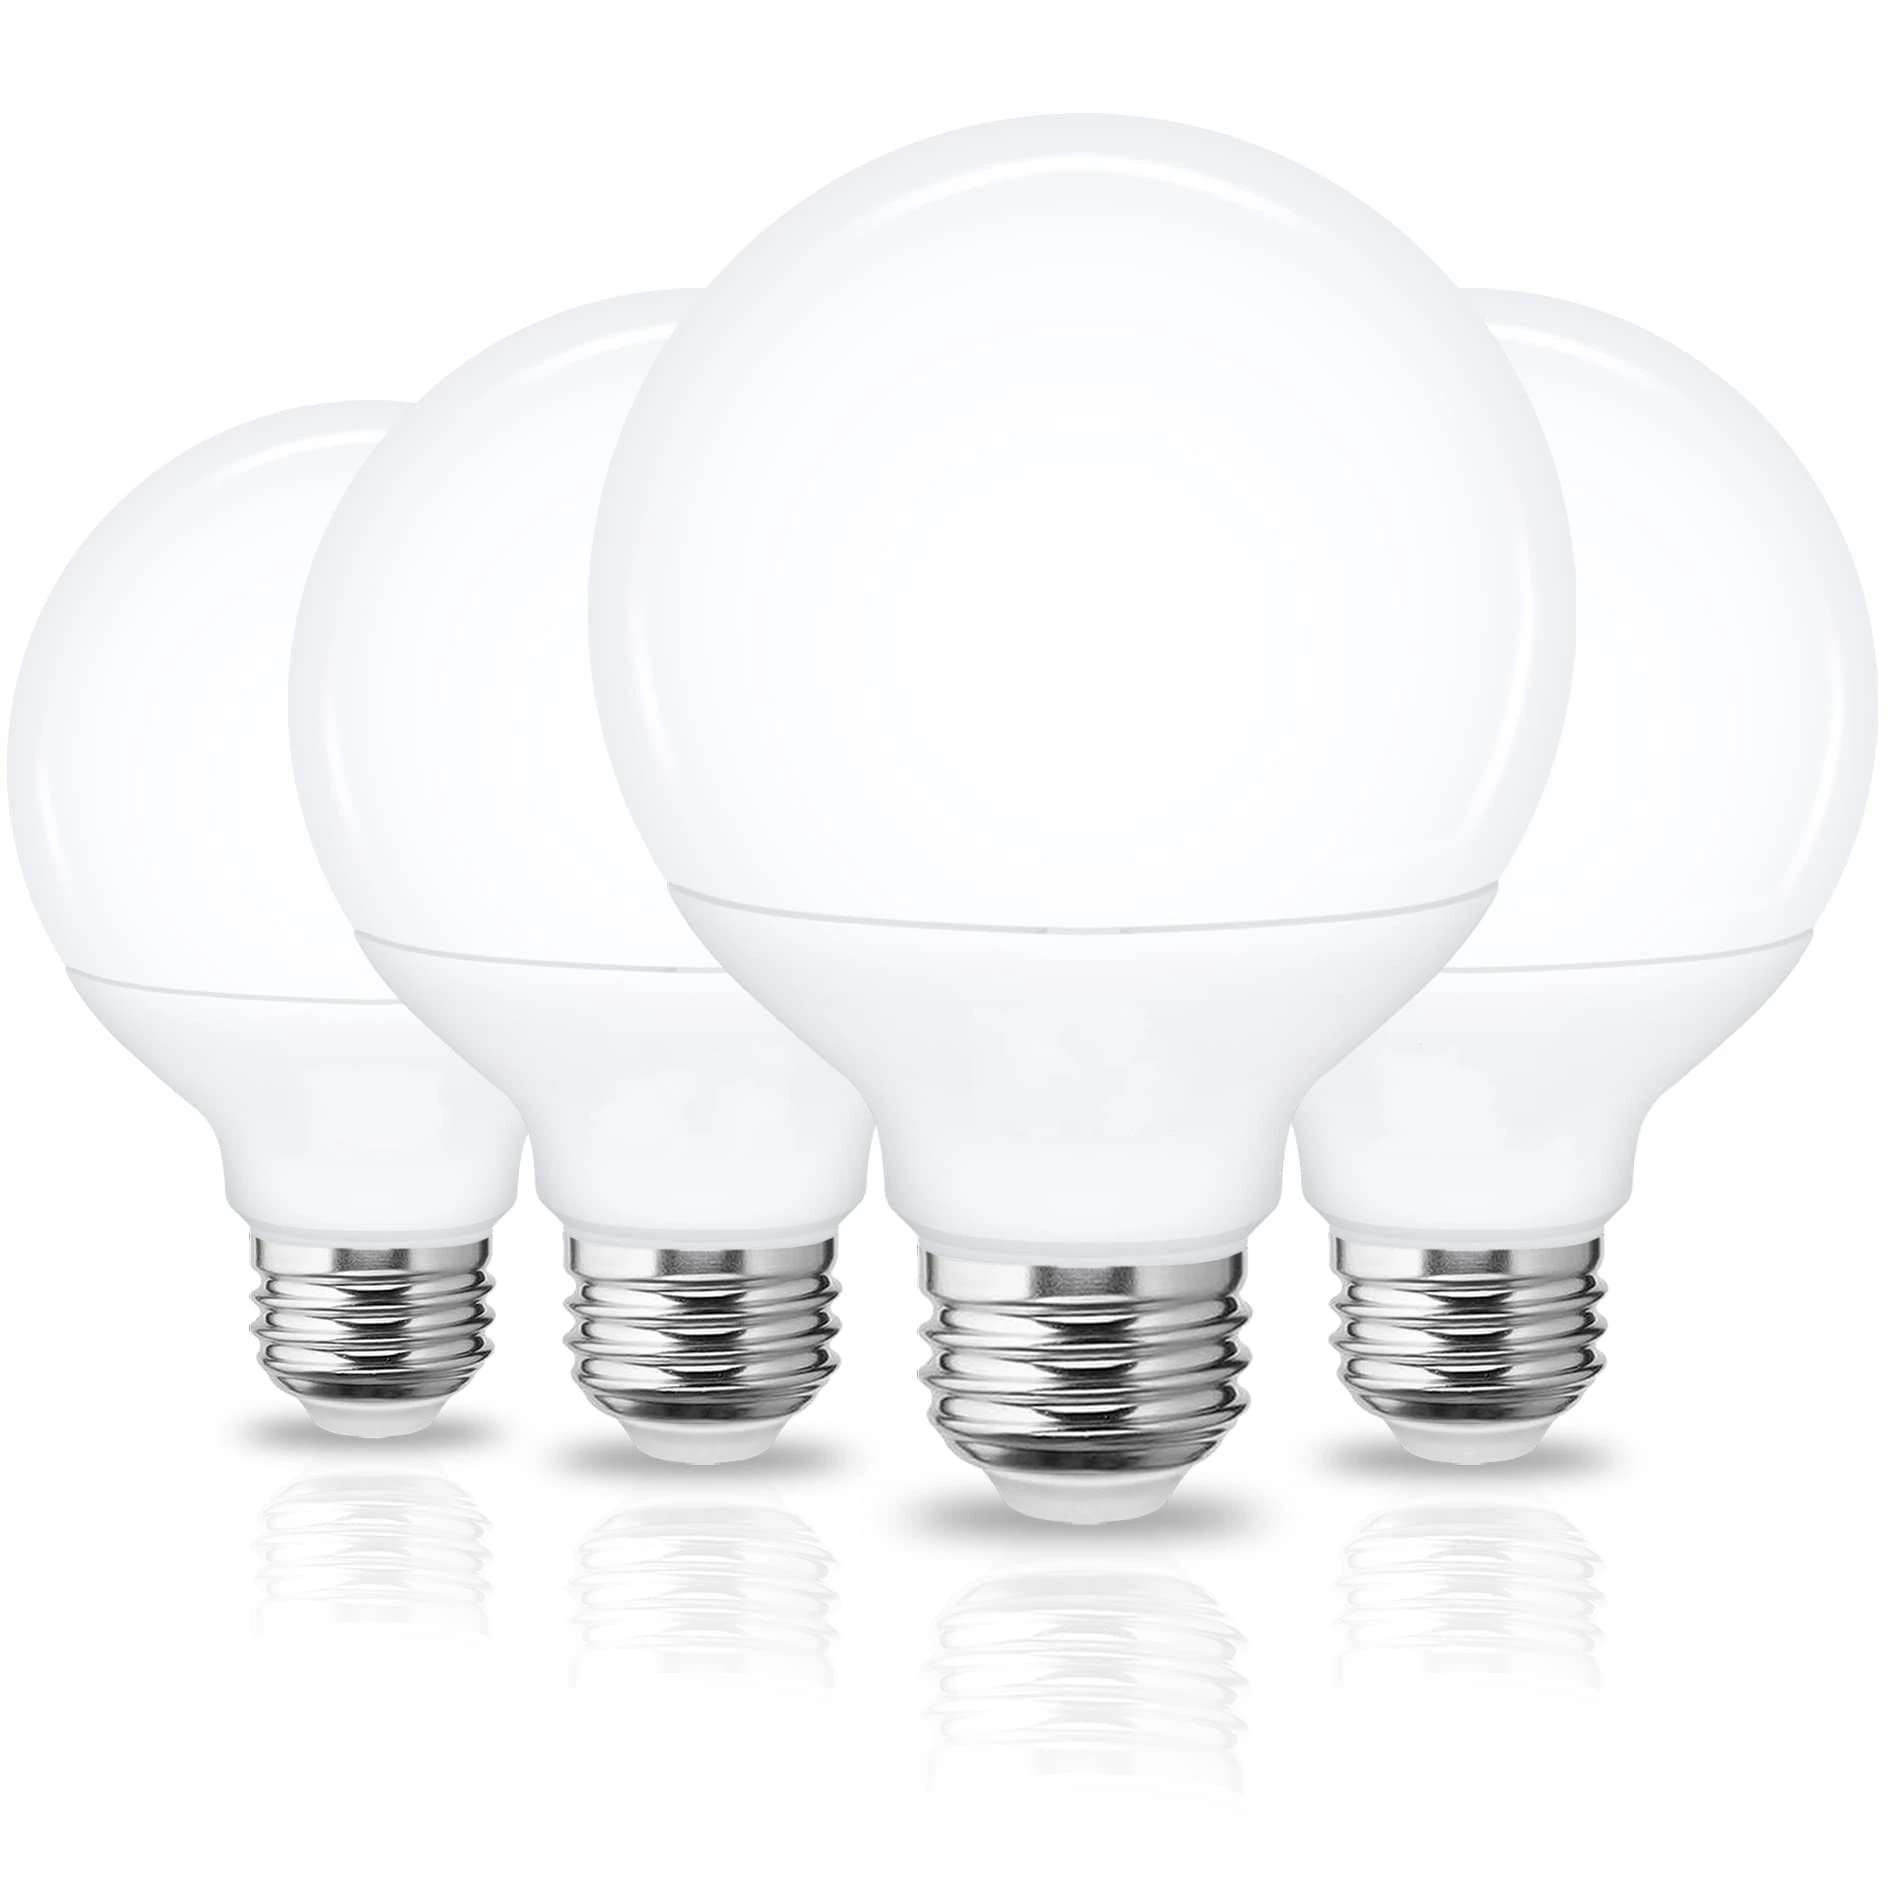 LED Bulb E27 20W 15W 110V 220V G80 G95 G125 Energy Saving Global Light Lampada Ampoule LED Light Bulb White Warm White LED Lamp